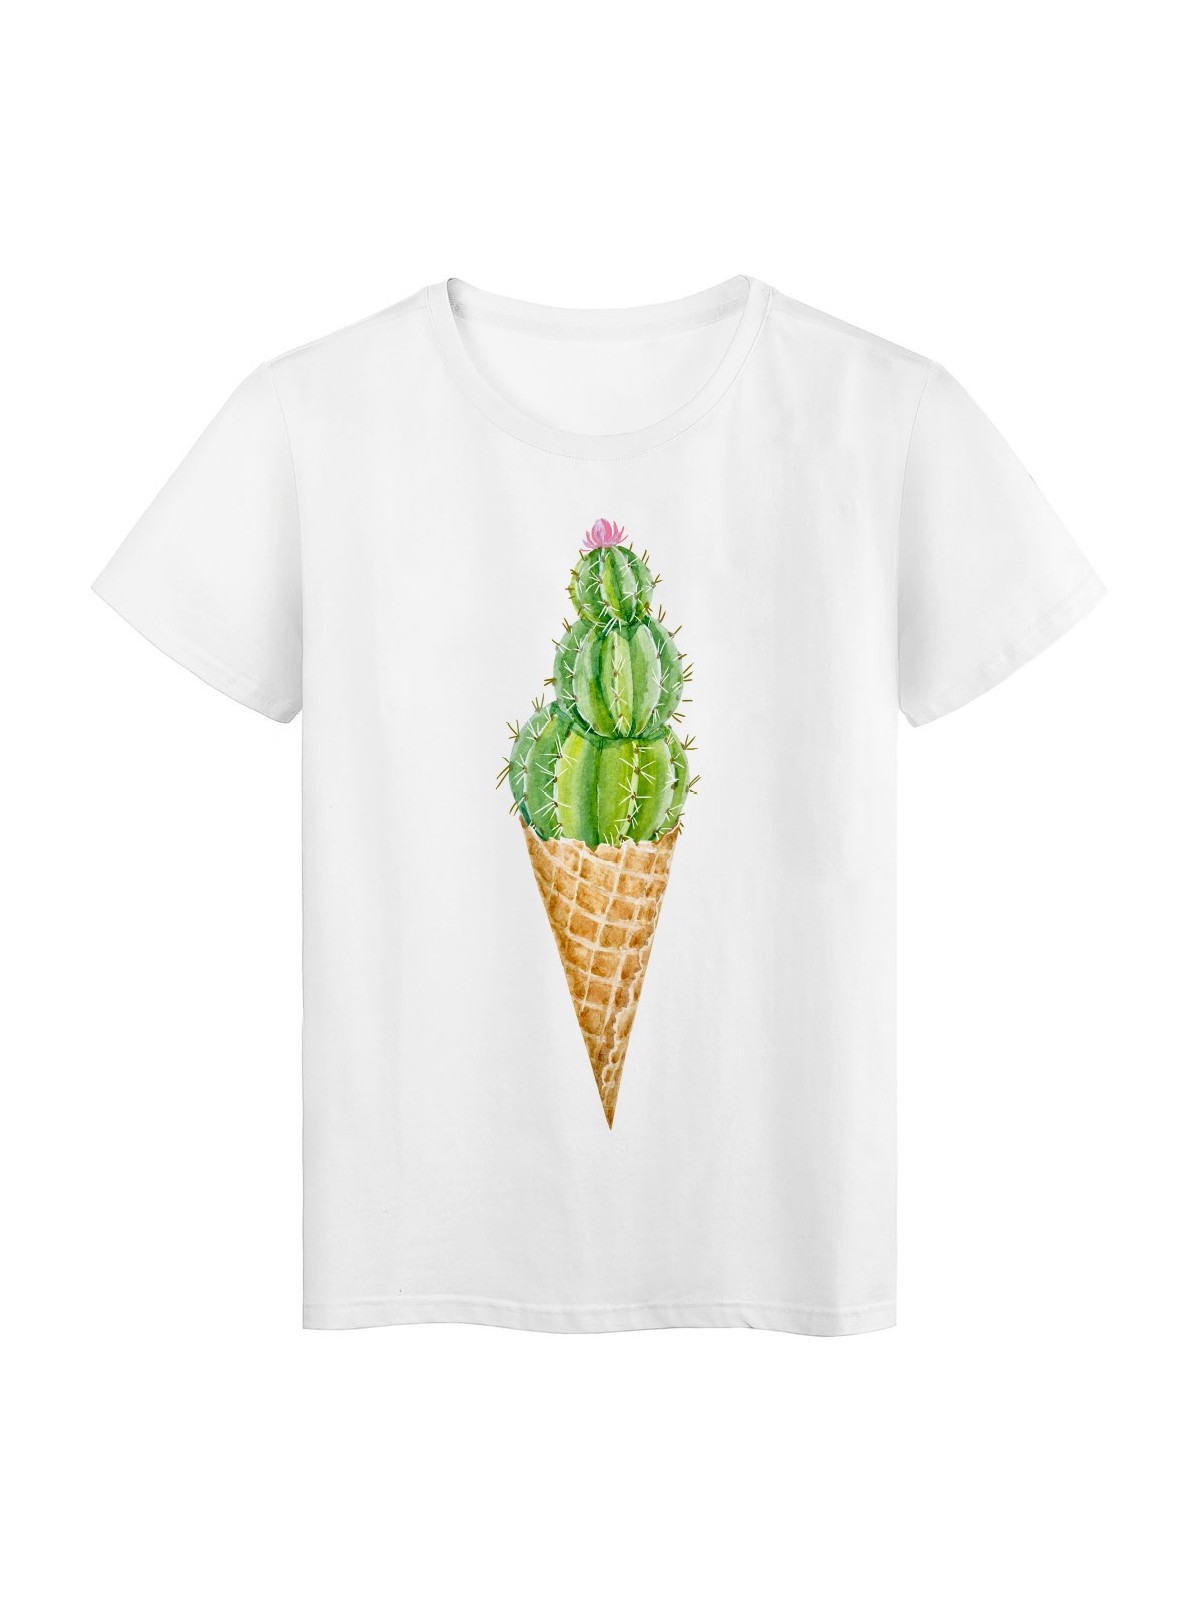 T-Shirt blanc Design cactus cornet de glace rÃ©f Tee shirt 2167